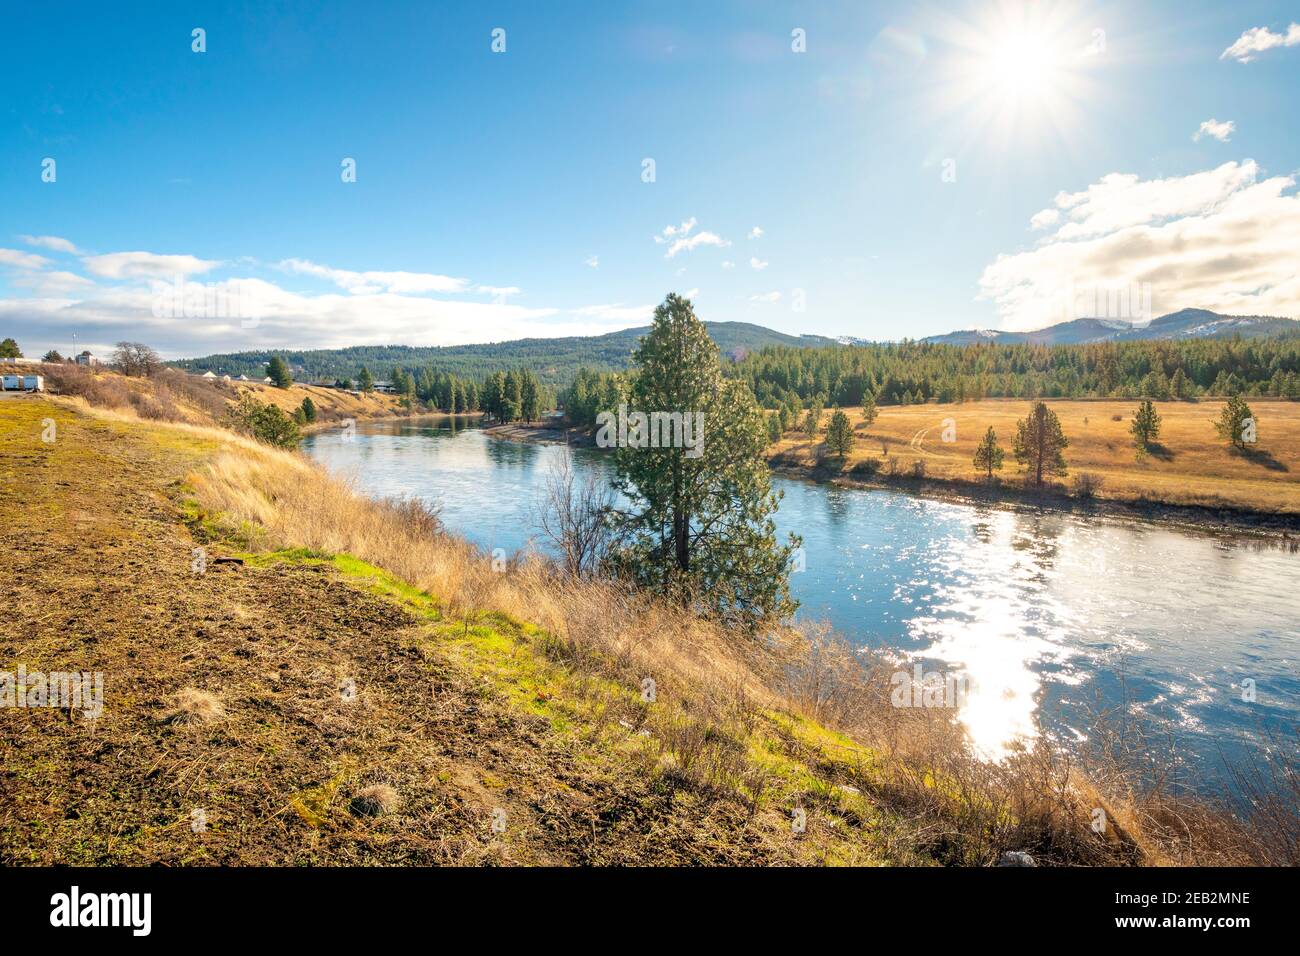 Scenic view of the Spokane River as it runs through the city of Post Falls Idaho, near Corbin Park and the Pleasant View prairie. Stock Photo